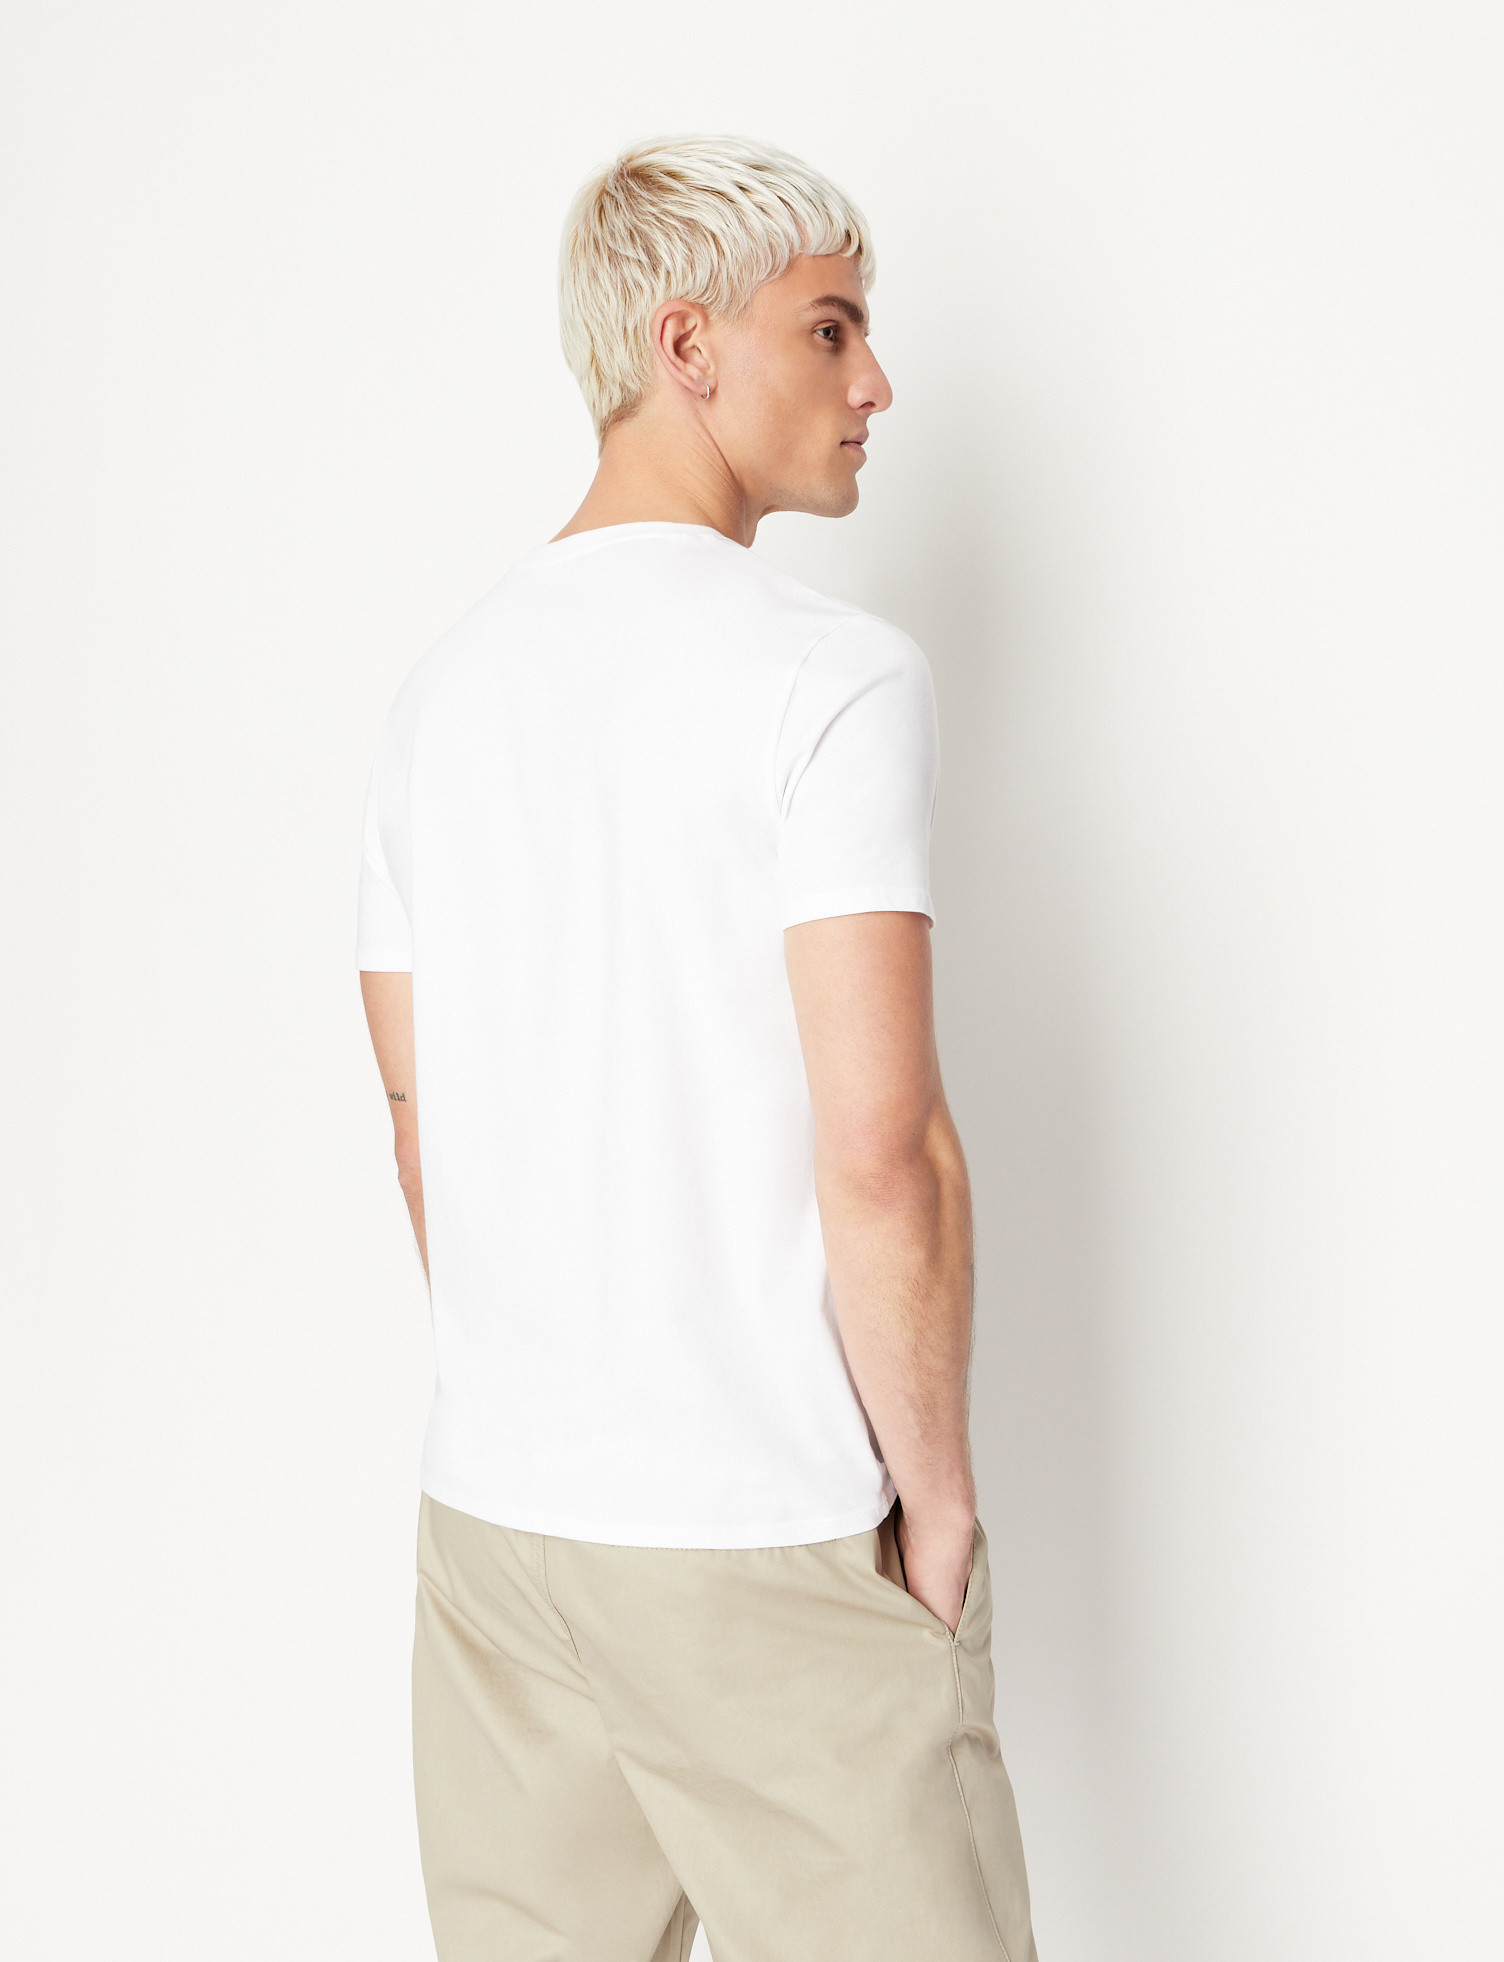 Armani Exchange - Slim fit printed T-shirt, White, large image number 2